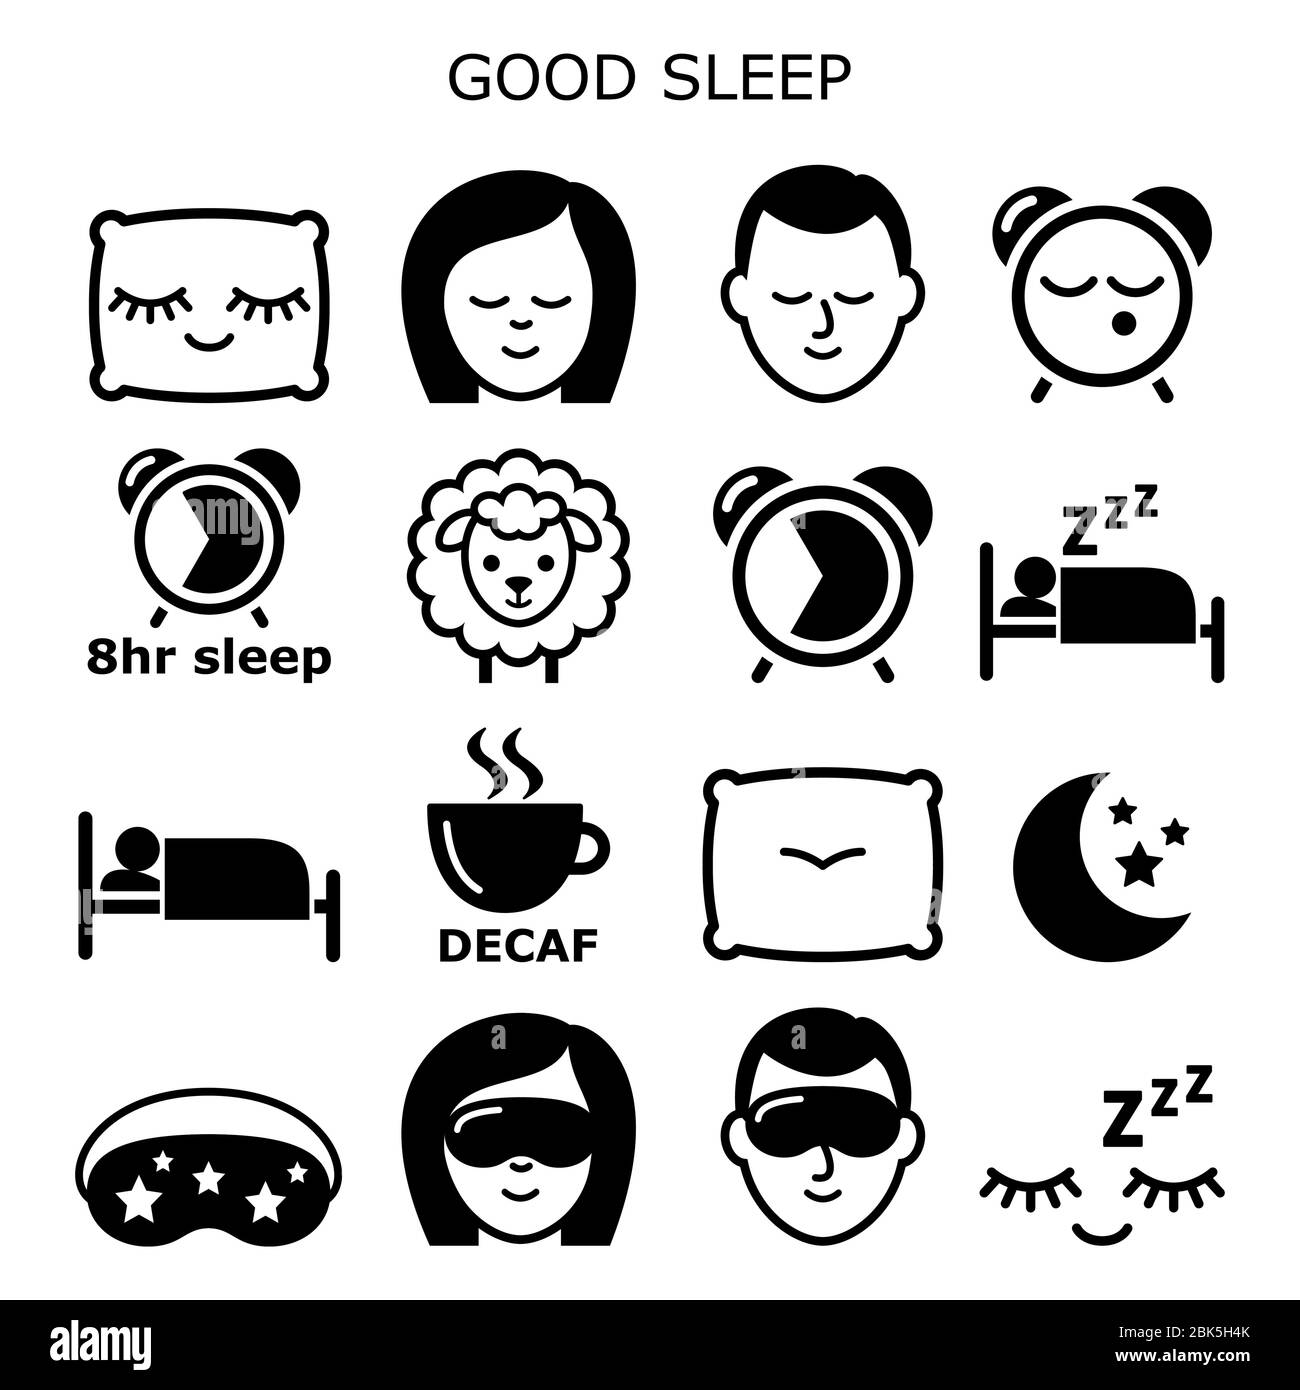 Good sleep hygiene, healthy sleep vector icons people sleeping at night design - health and lifestyle concept Stock Vector